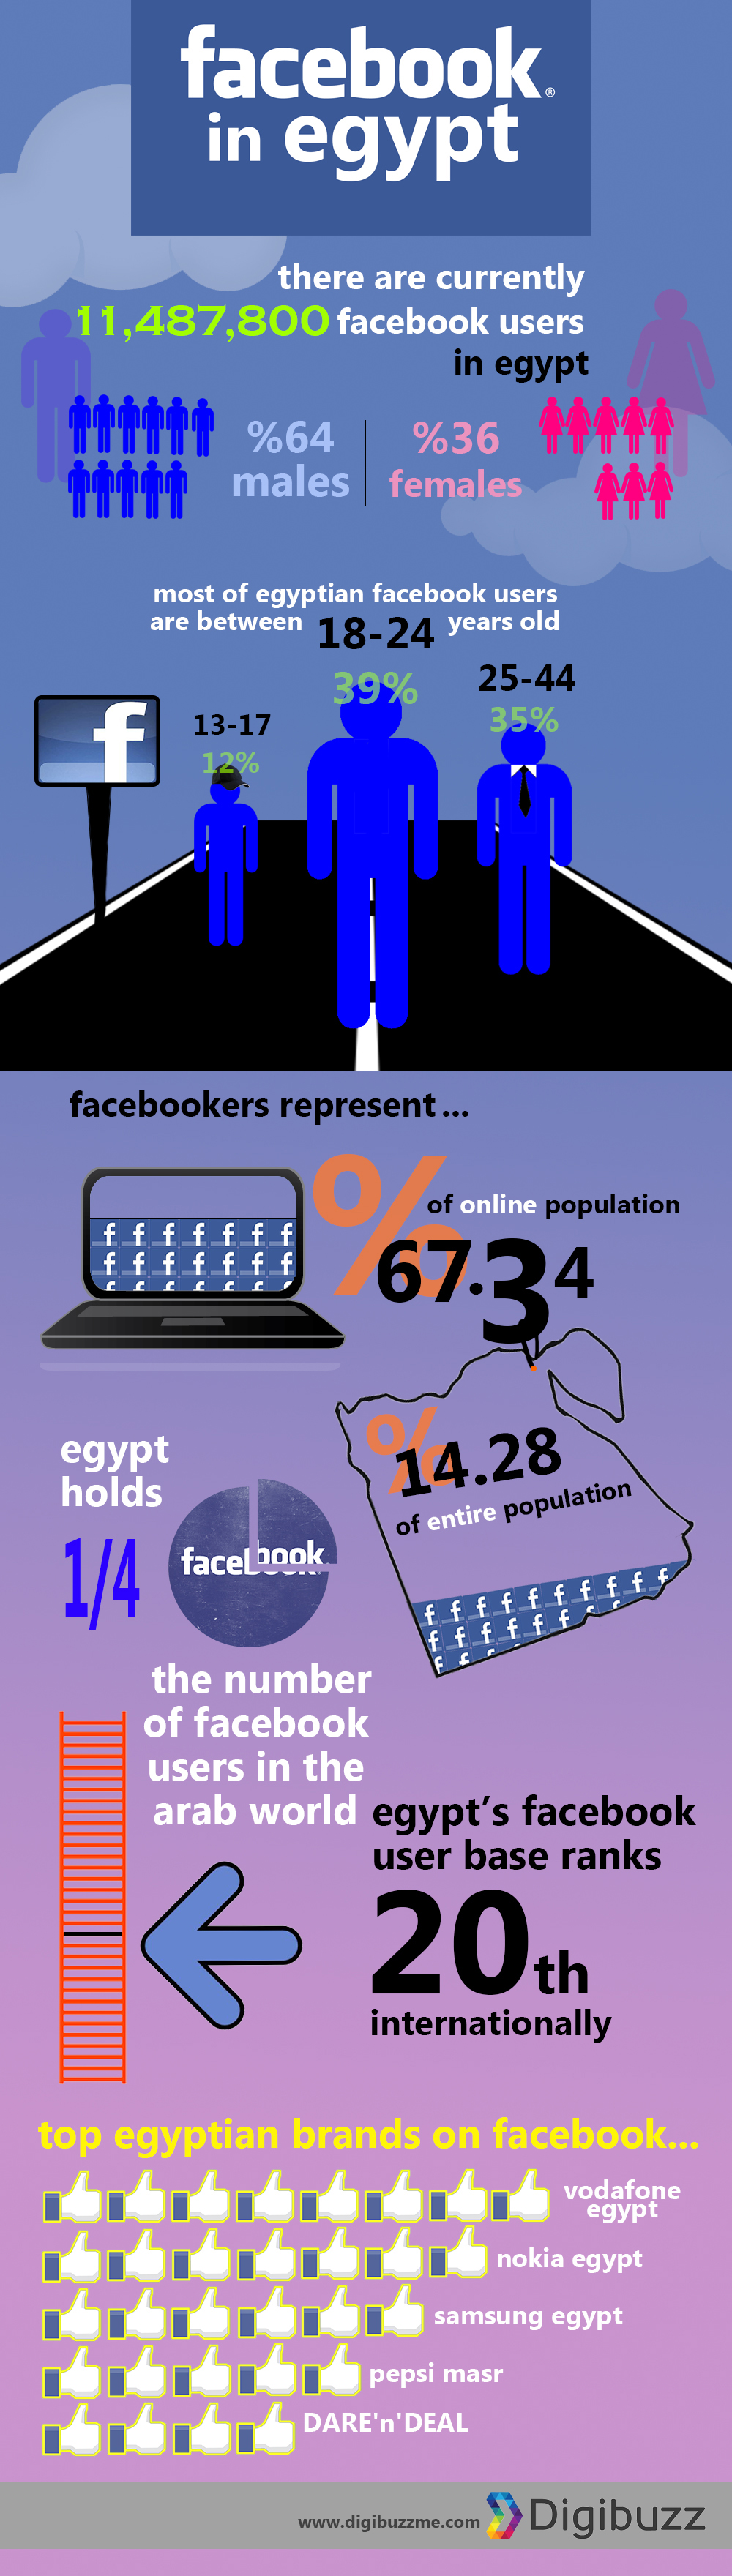 Facebook in Egypt